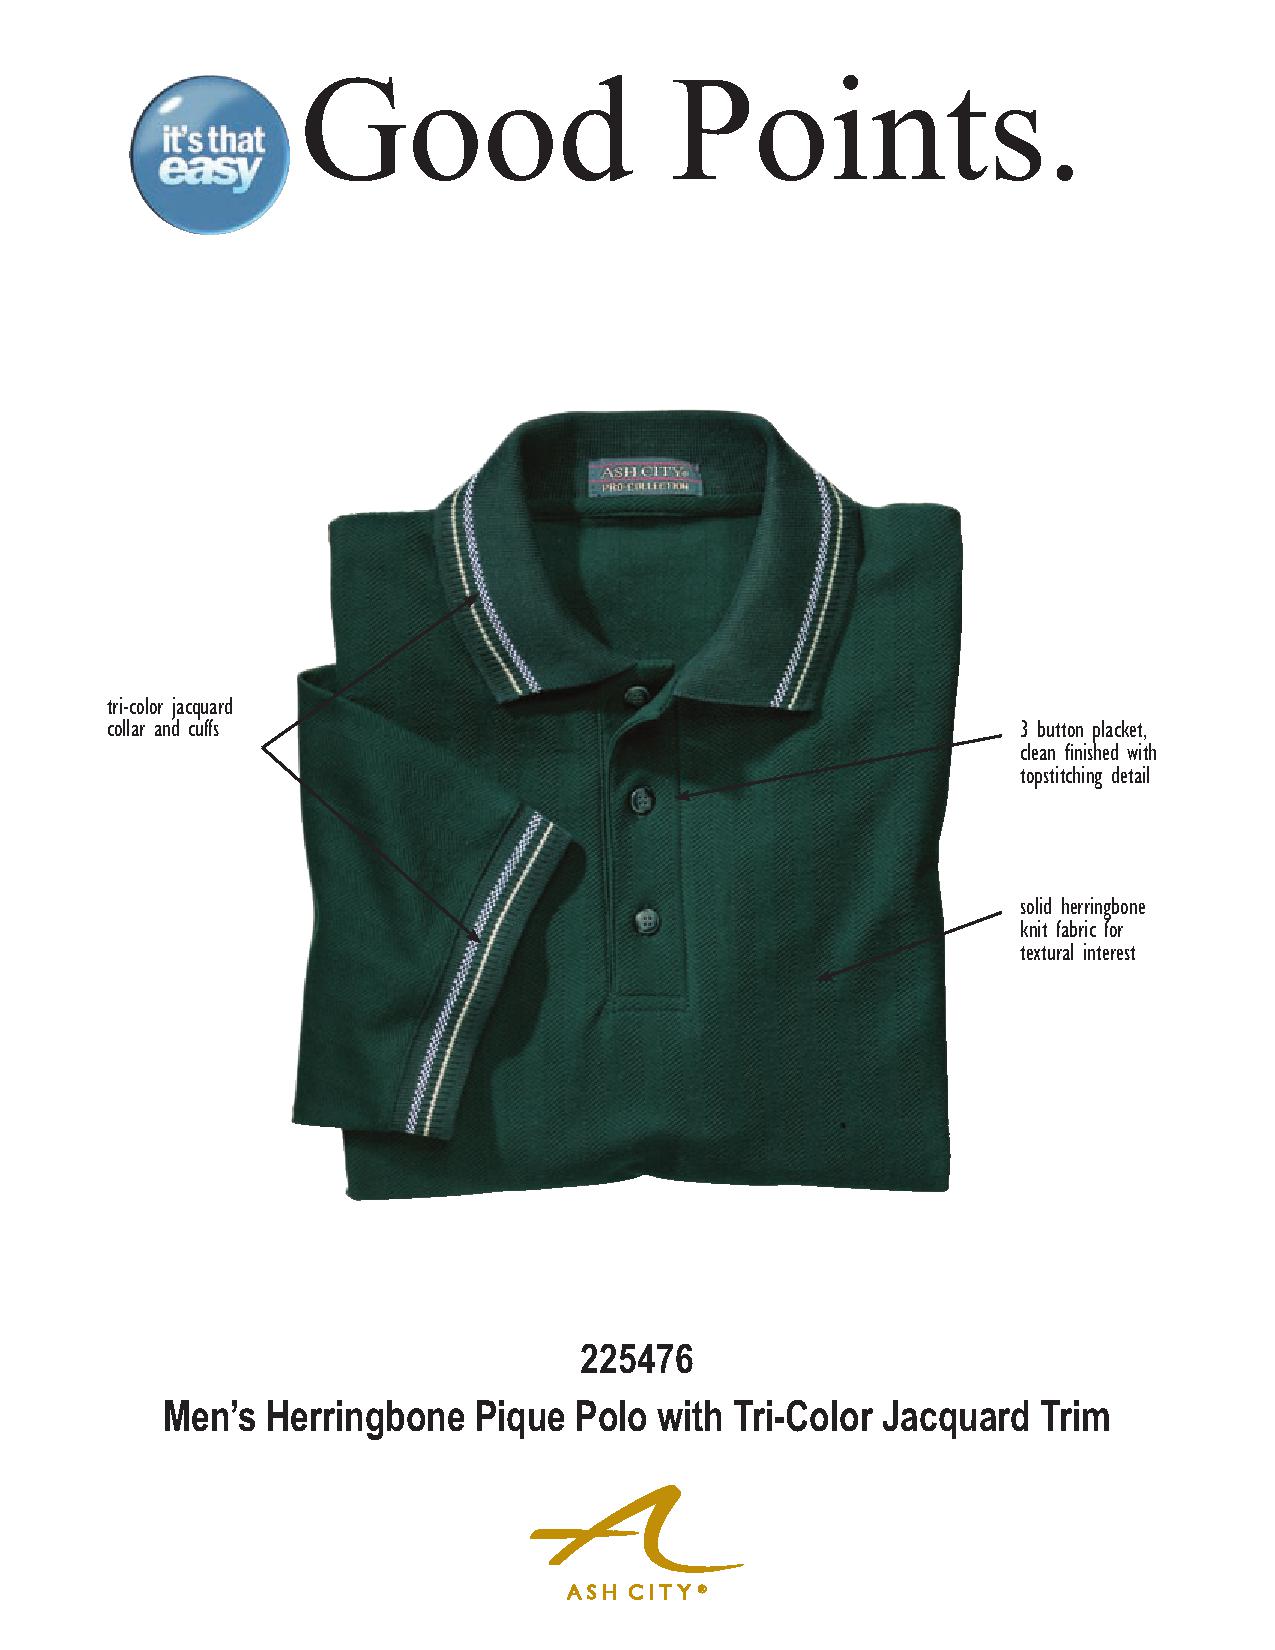 Ash City Pique 225476 - Men's Herringbone Pique Polo With Tri-Color Jacquard Trim